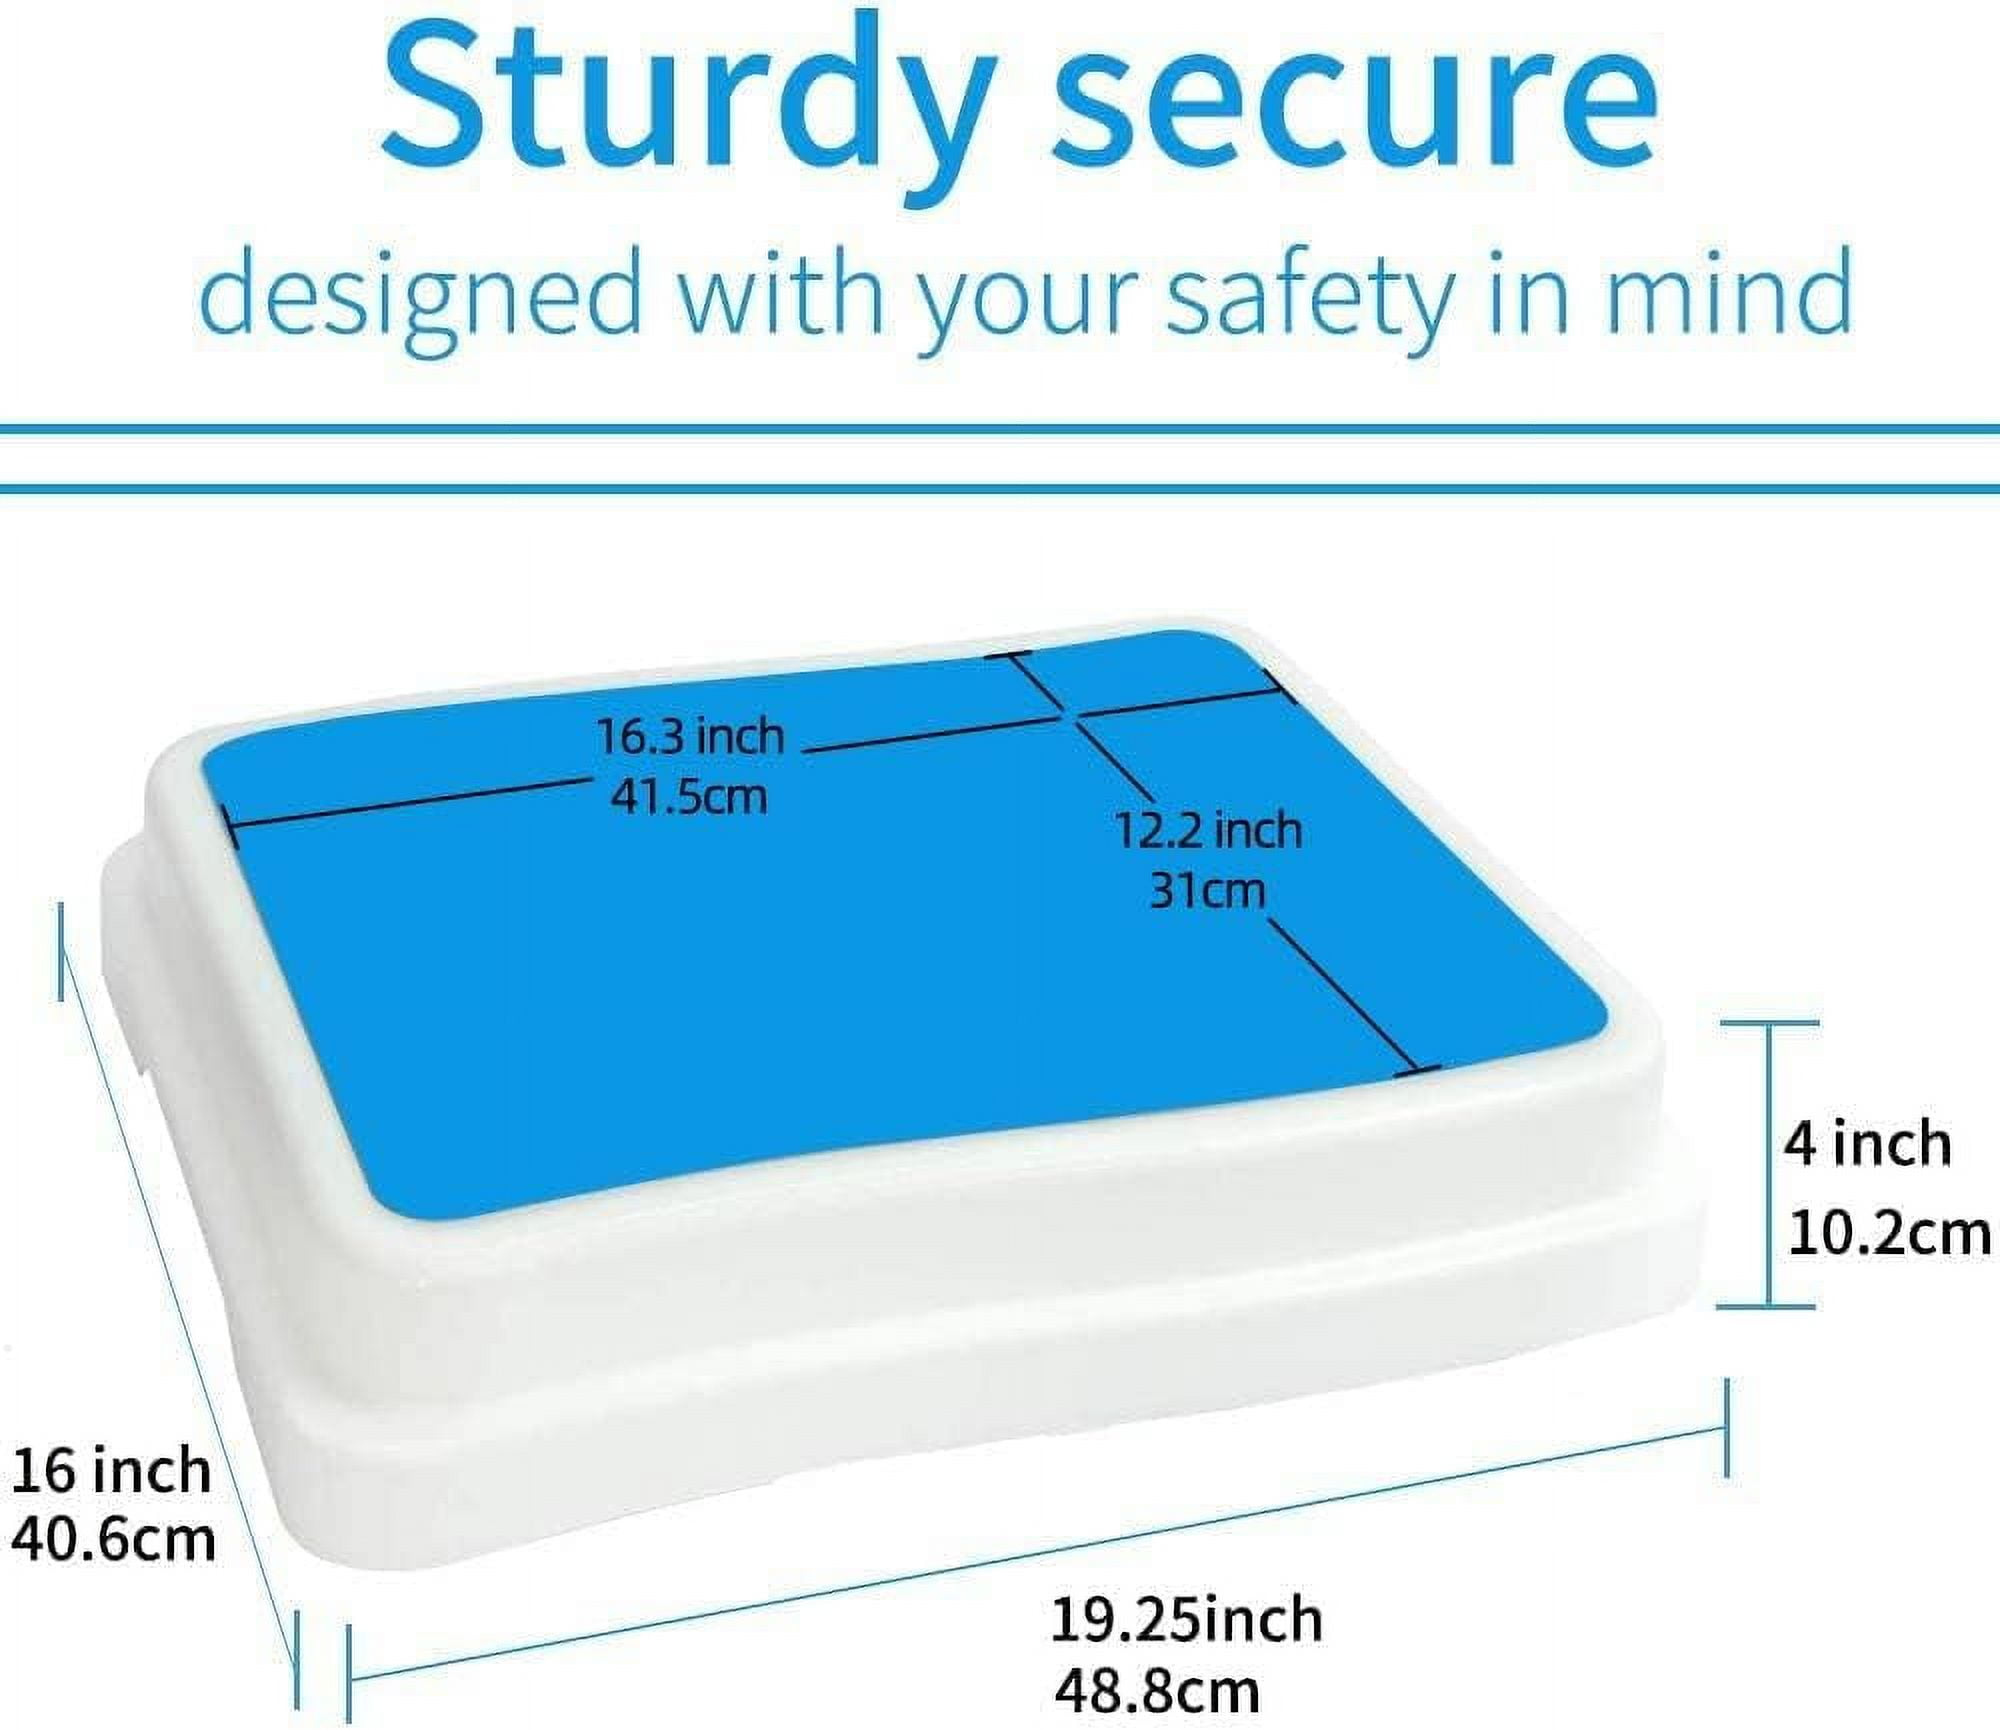 Vive Bath Shower Step Stool (4.5) - Slip Resistant Stackable